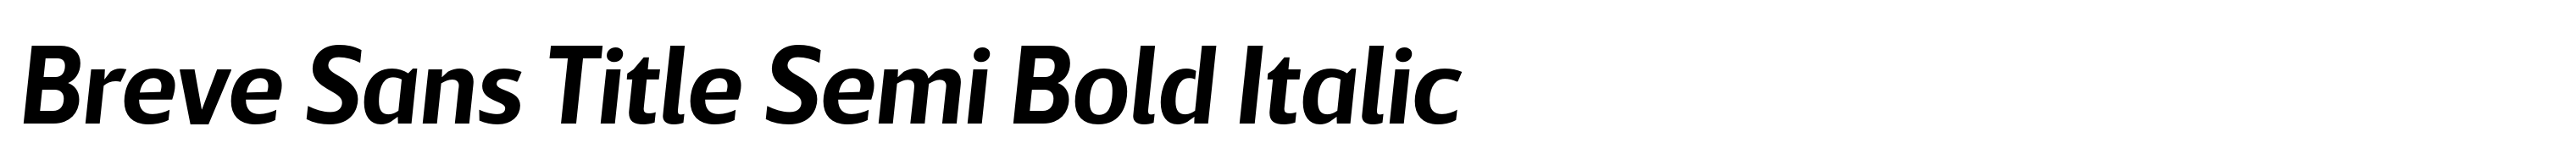 Breve Sans Title Semi Bold Italic